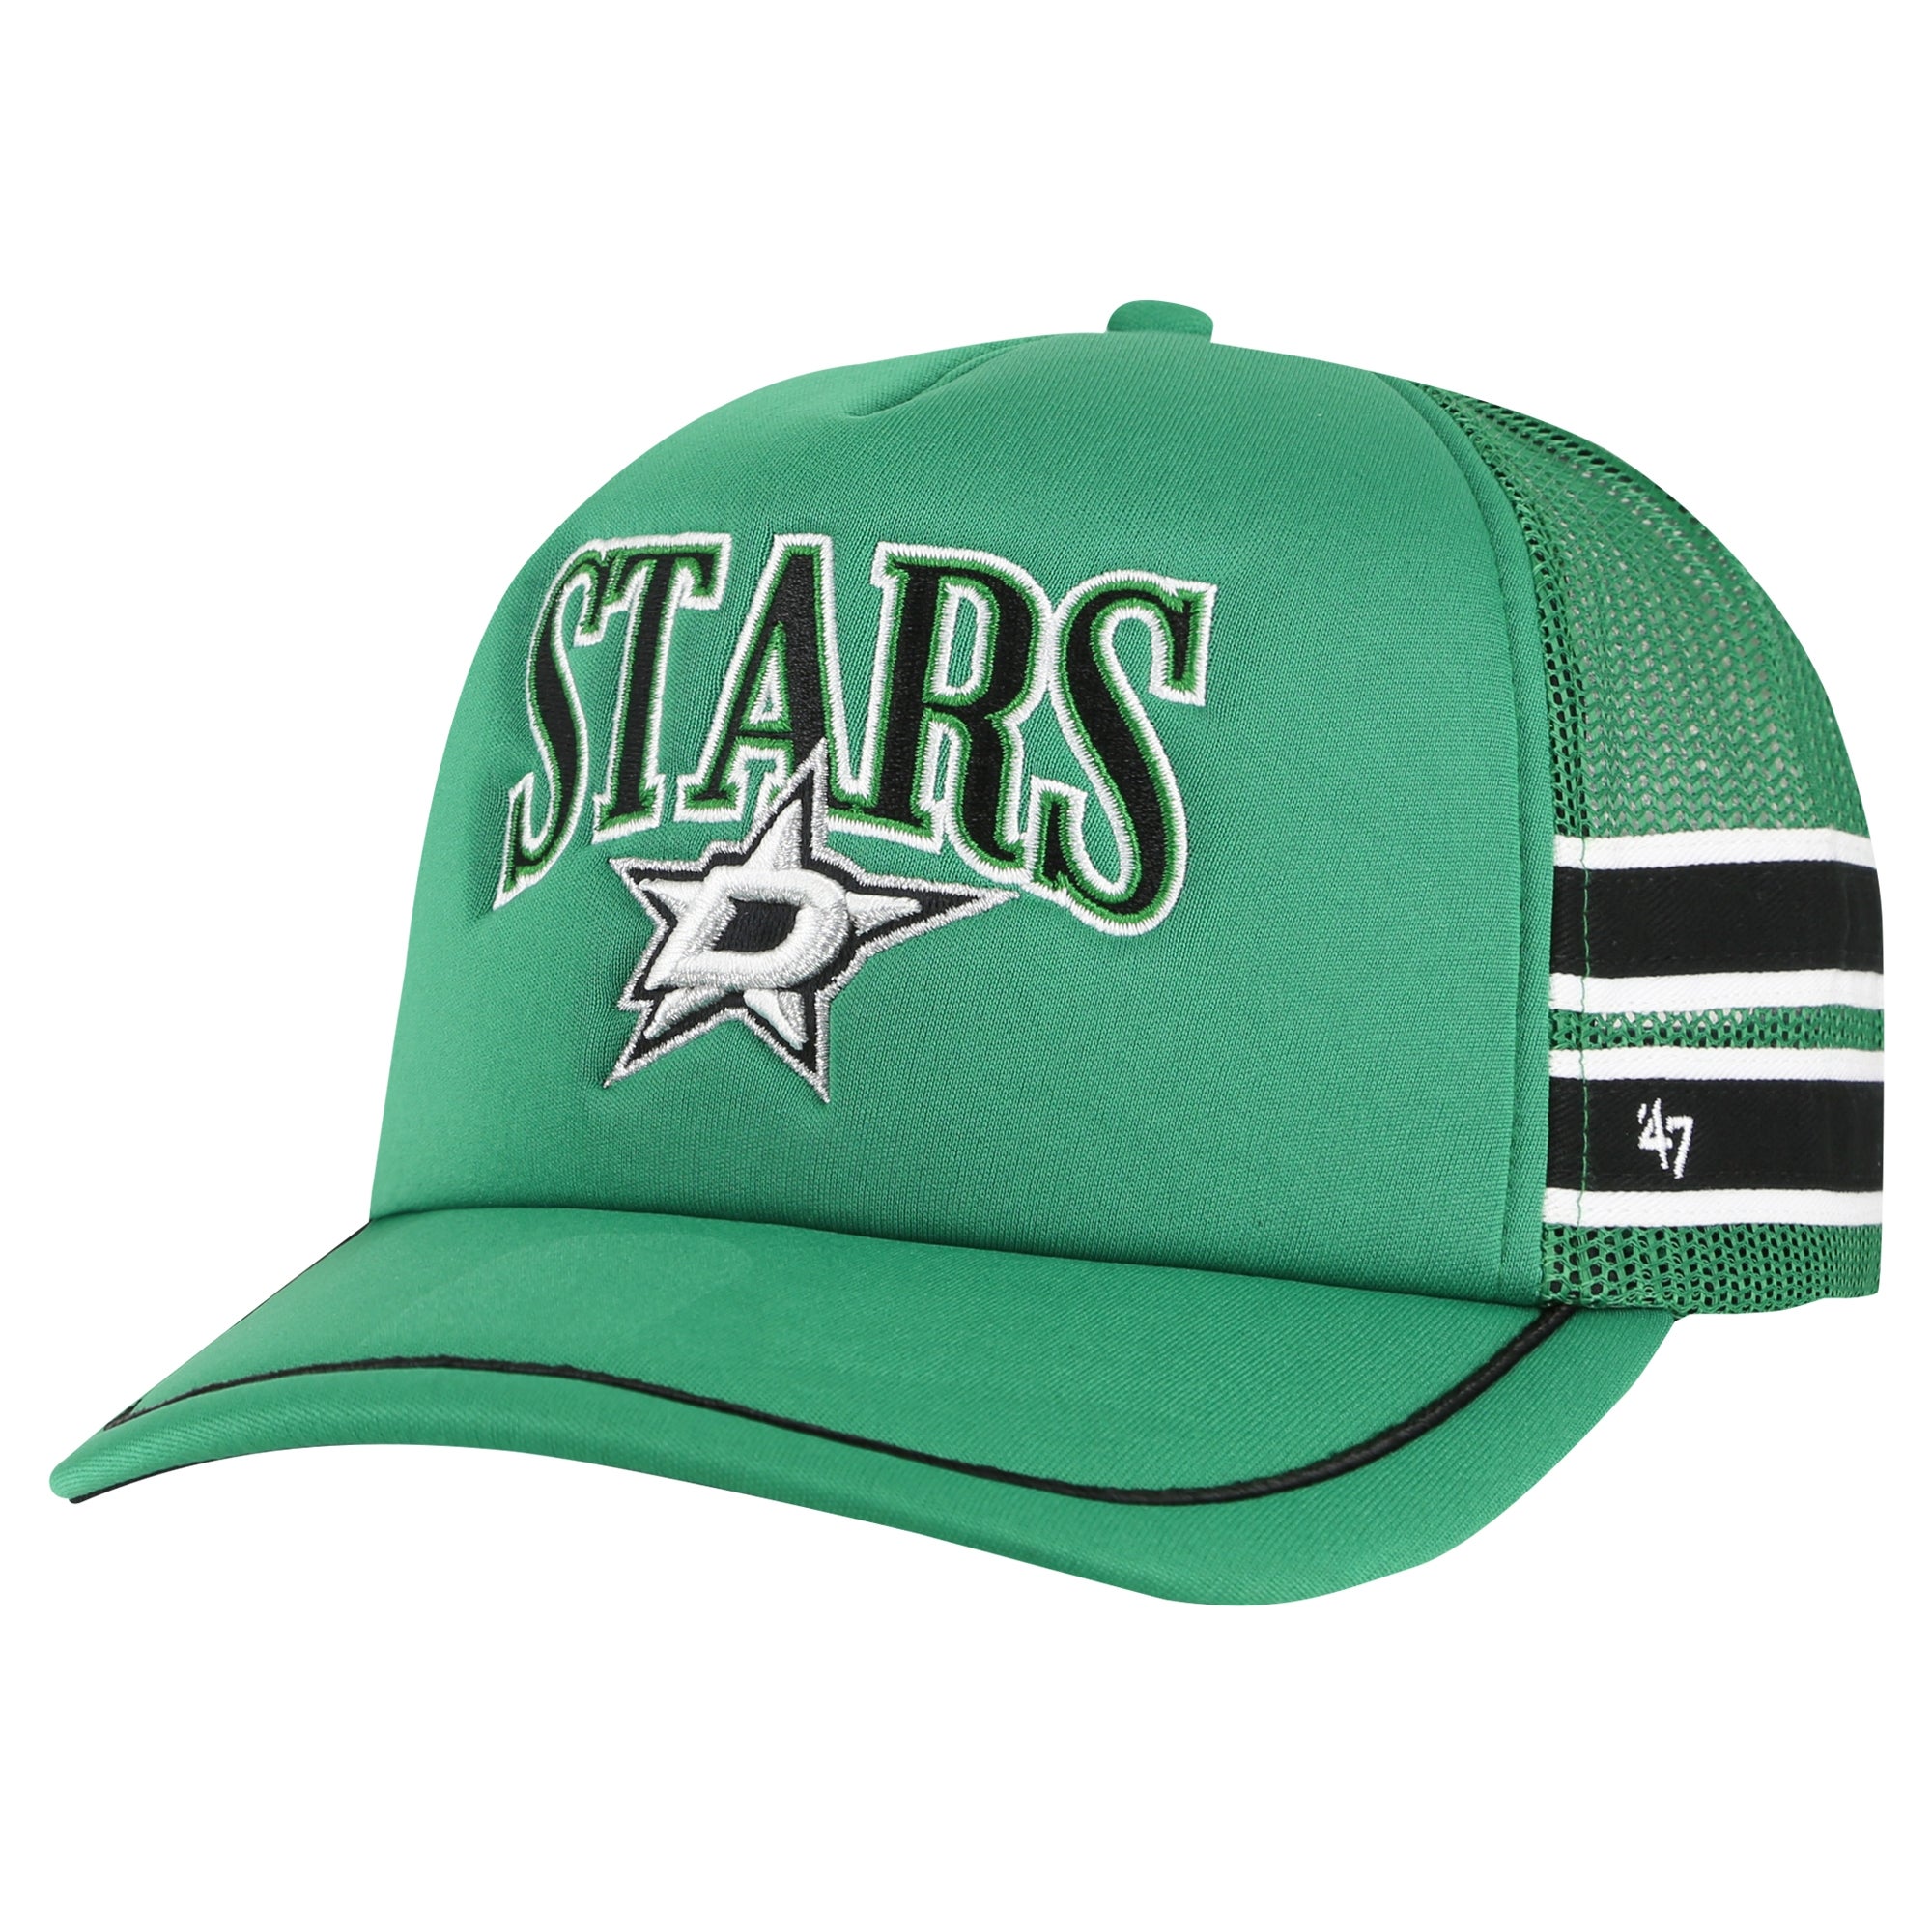 47 Brand Stars Sideband Stripes Adjustable Trucker Hat